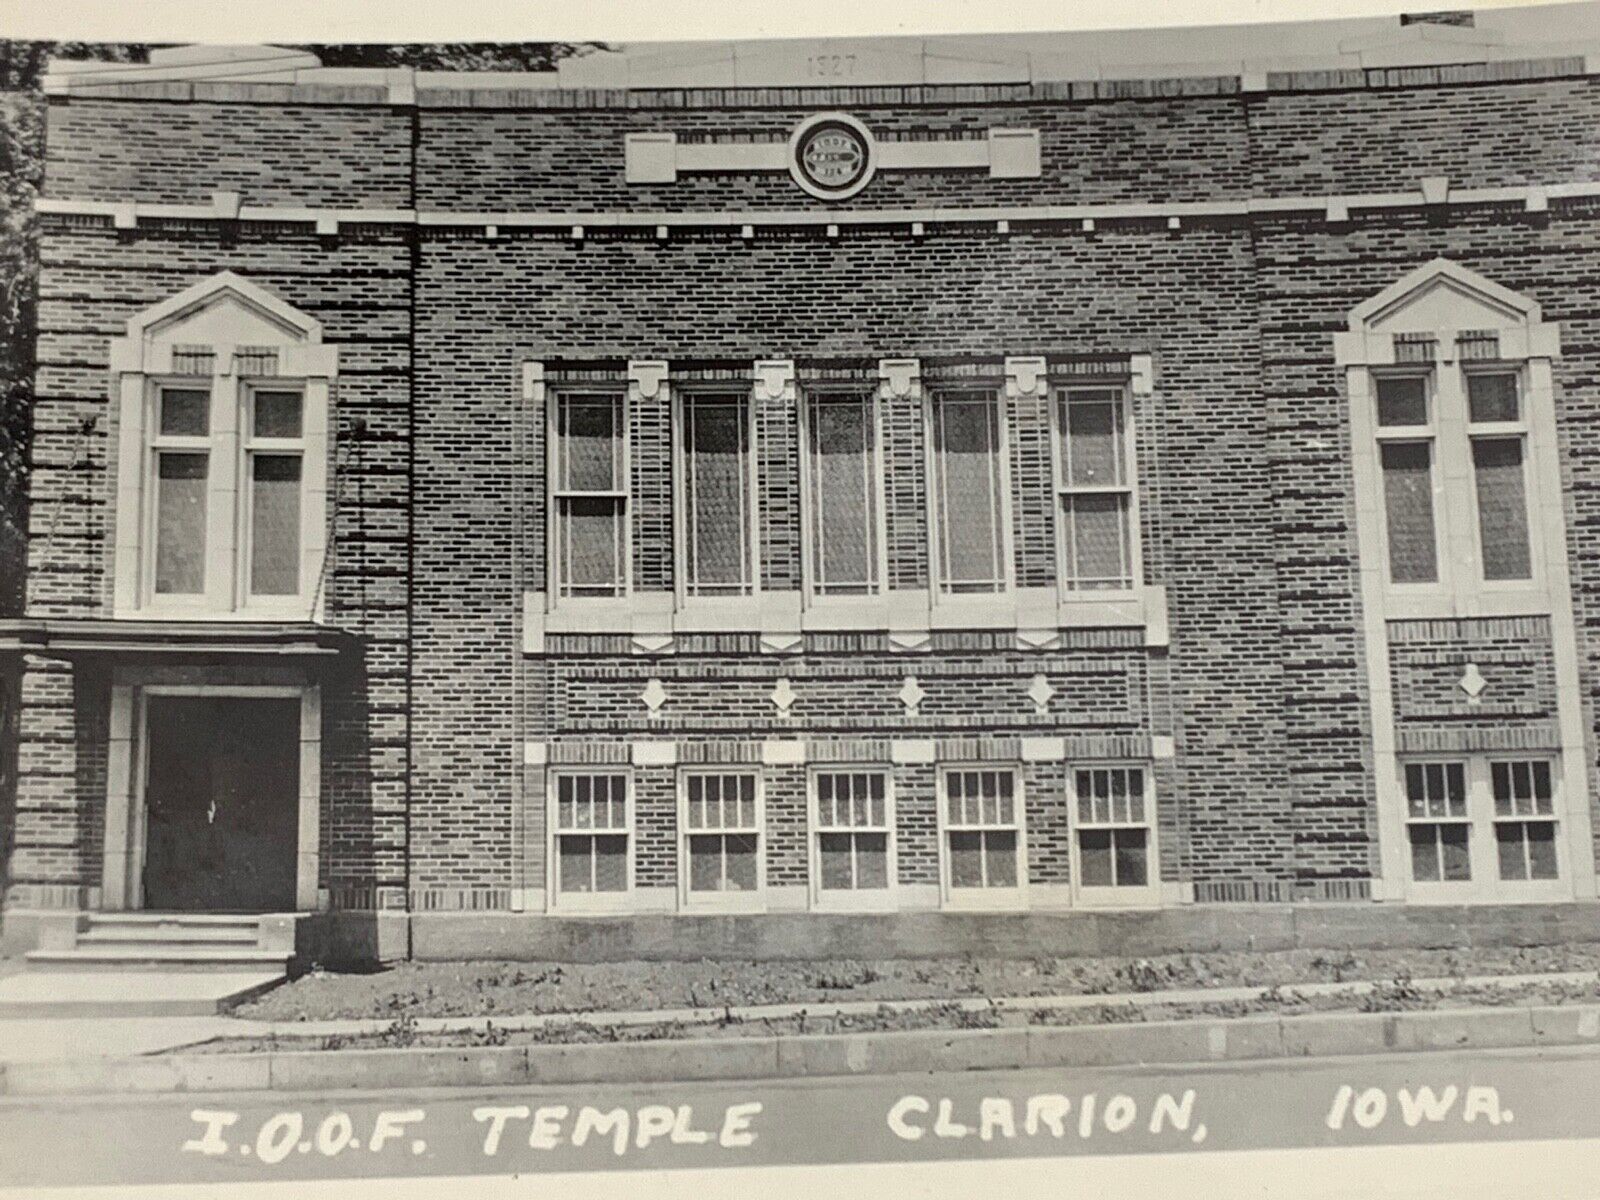 (Kg) RPPC Photo Postcard Photograph I.O.O.F. Temple Clarion Iowa Odd Fellows 